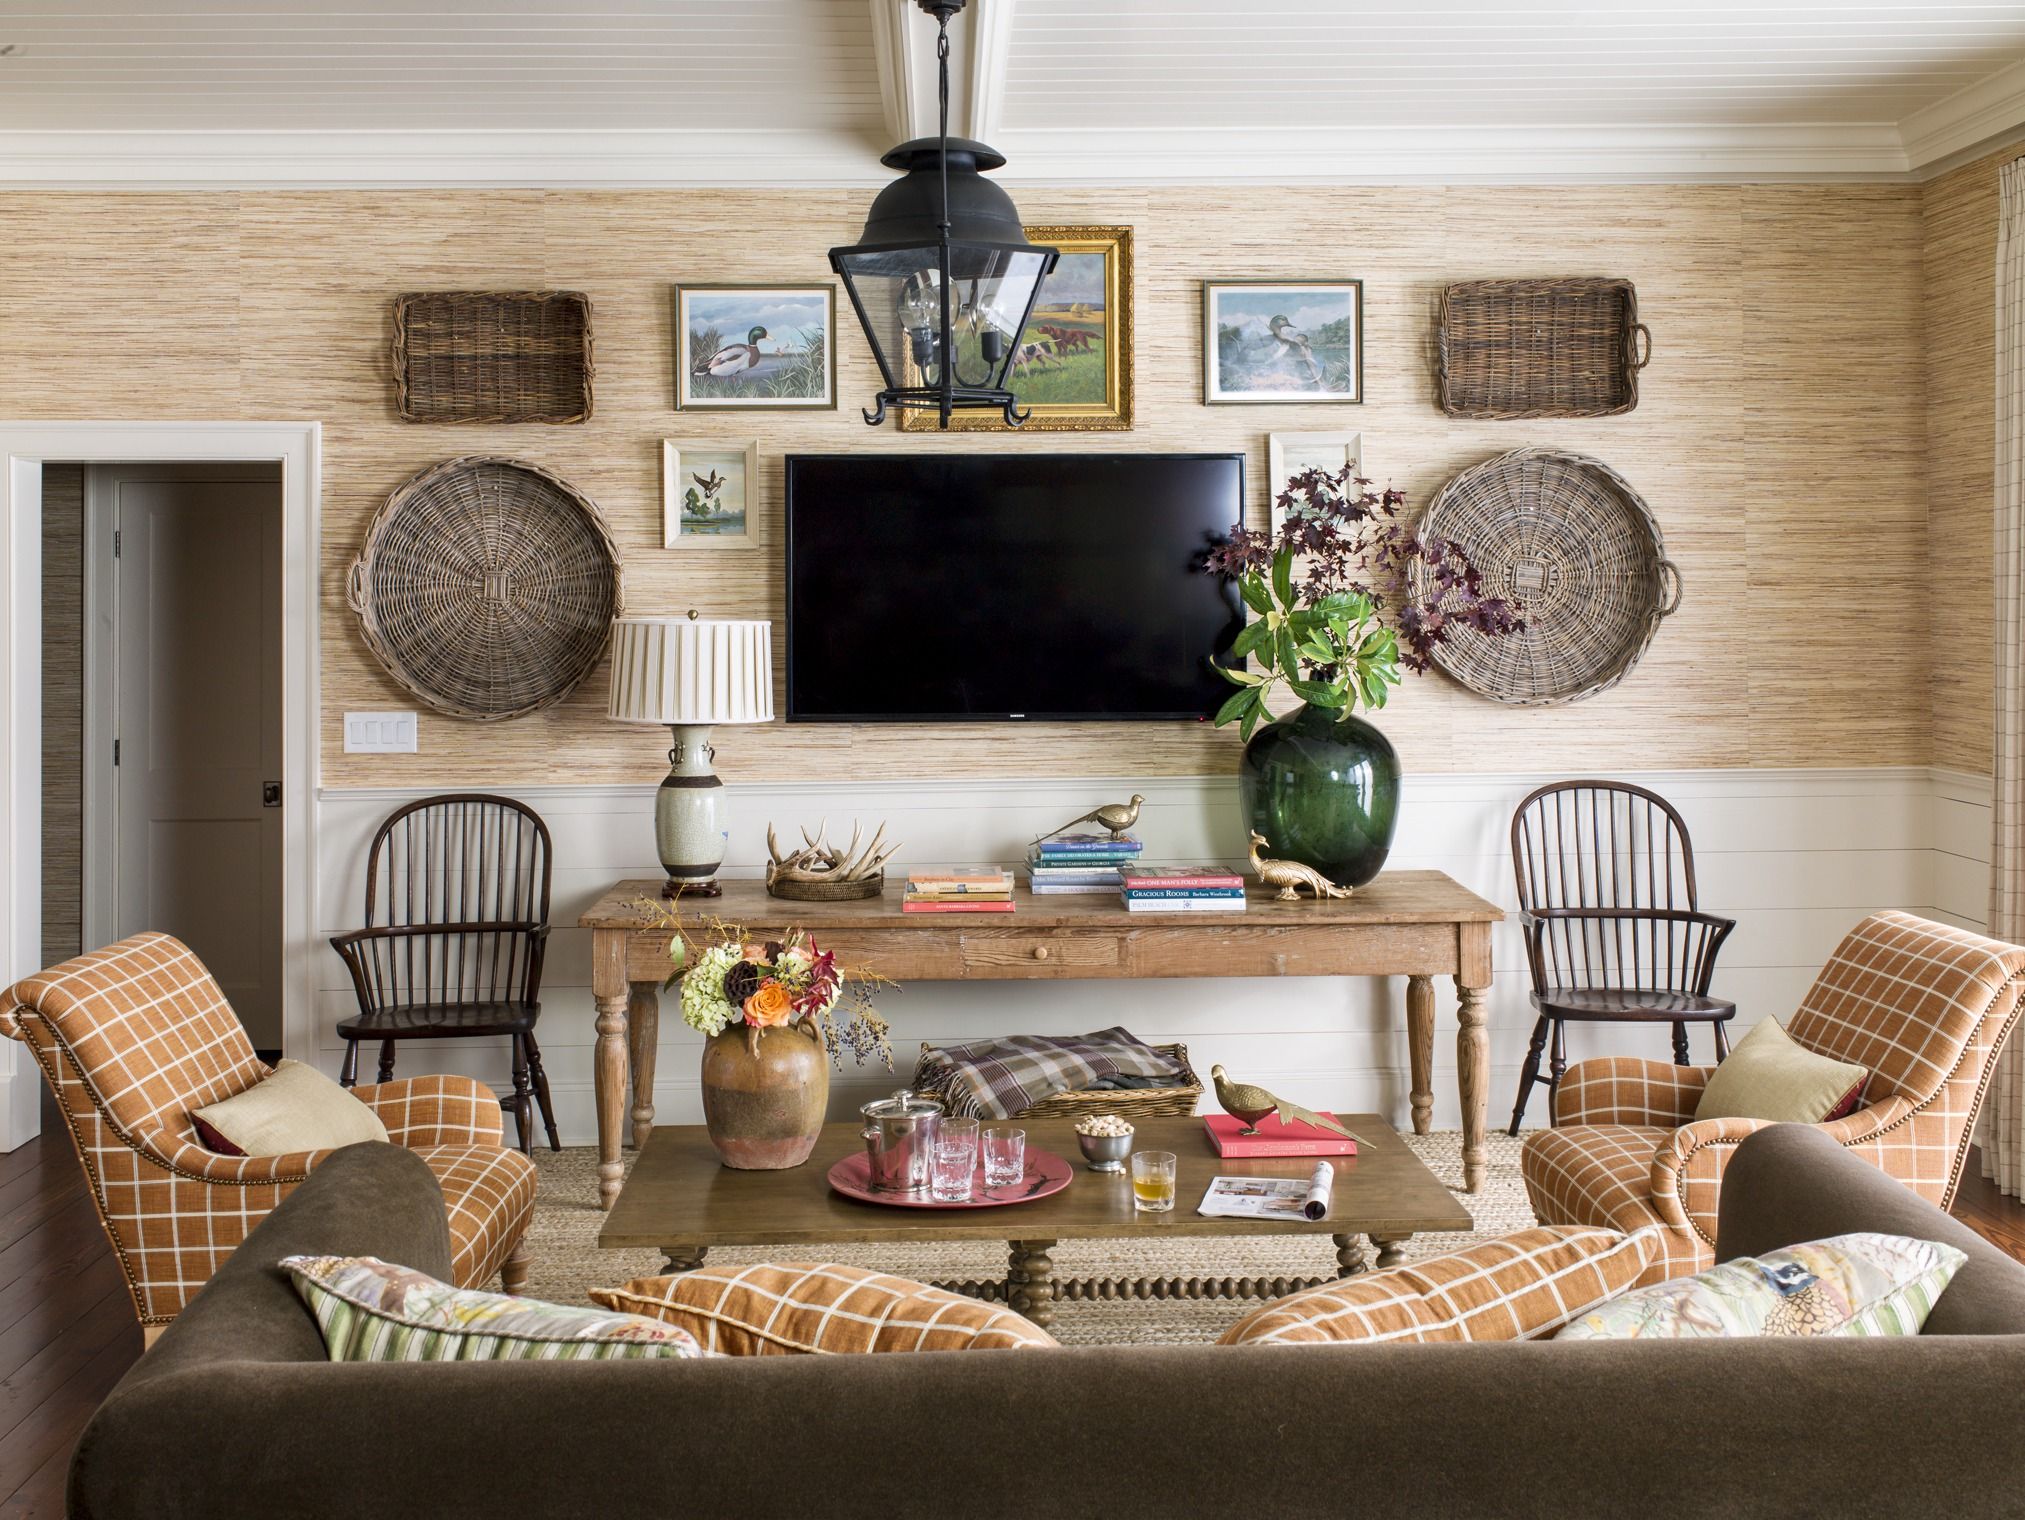 25 Rustic Living Room Ideas Modern, Decorating Living Room Wall Ideas